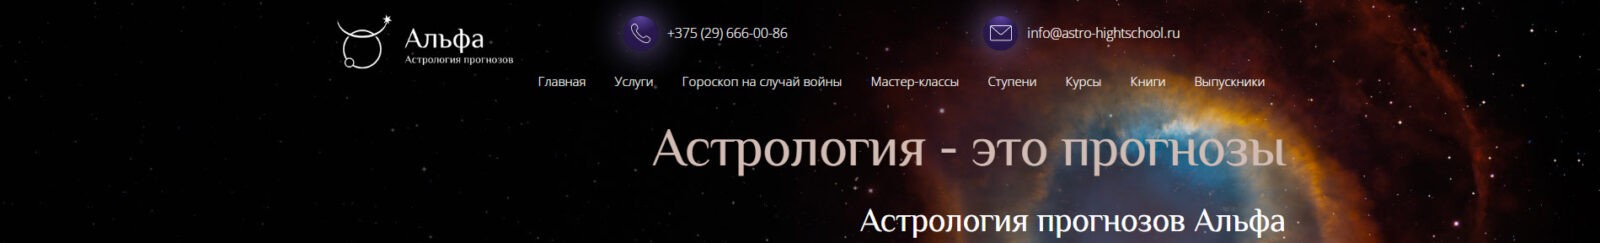 Школа астрологии Ашвини сайт